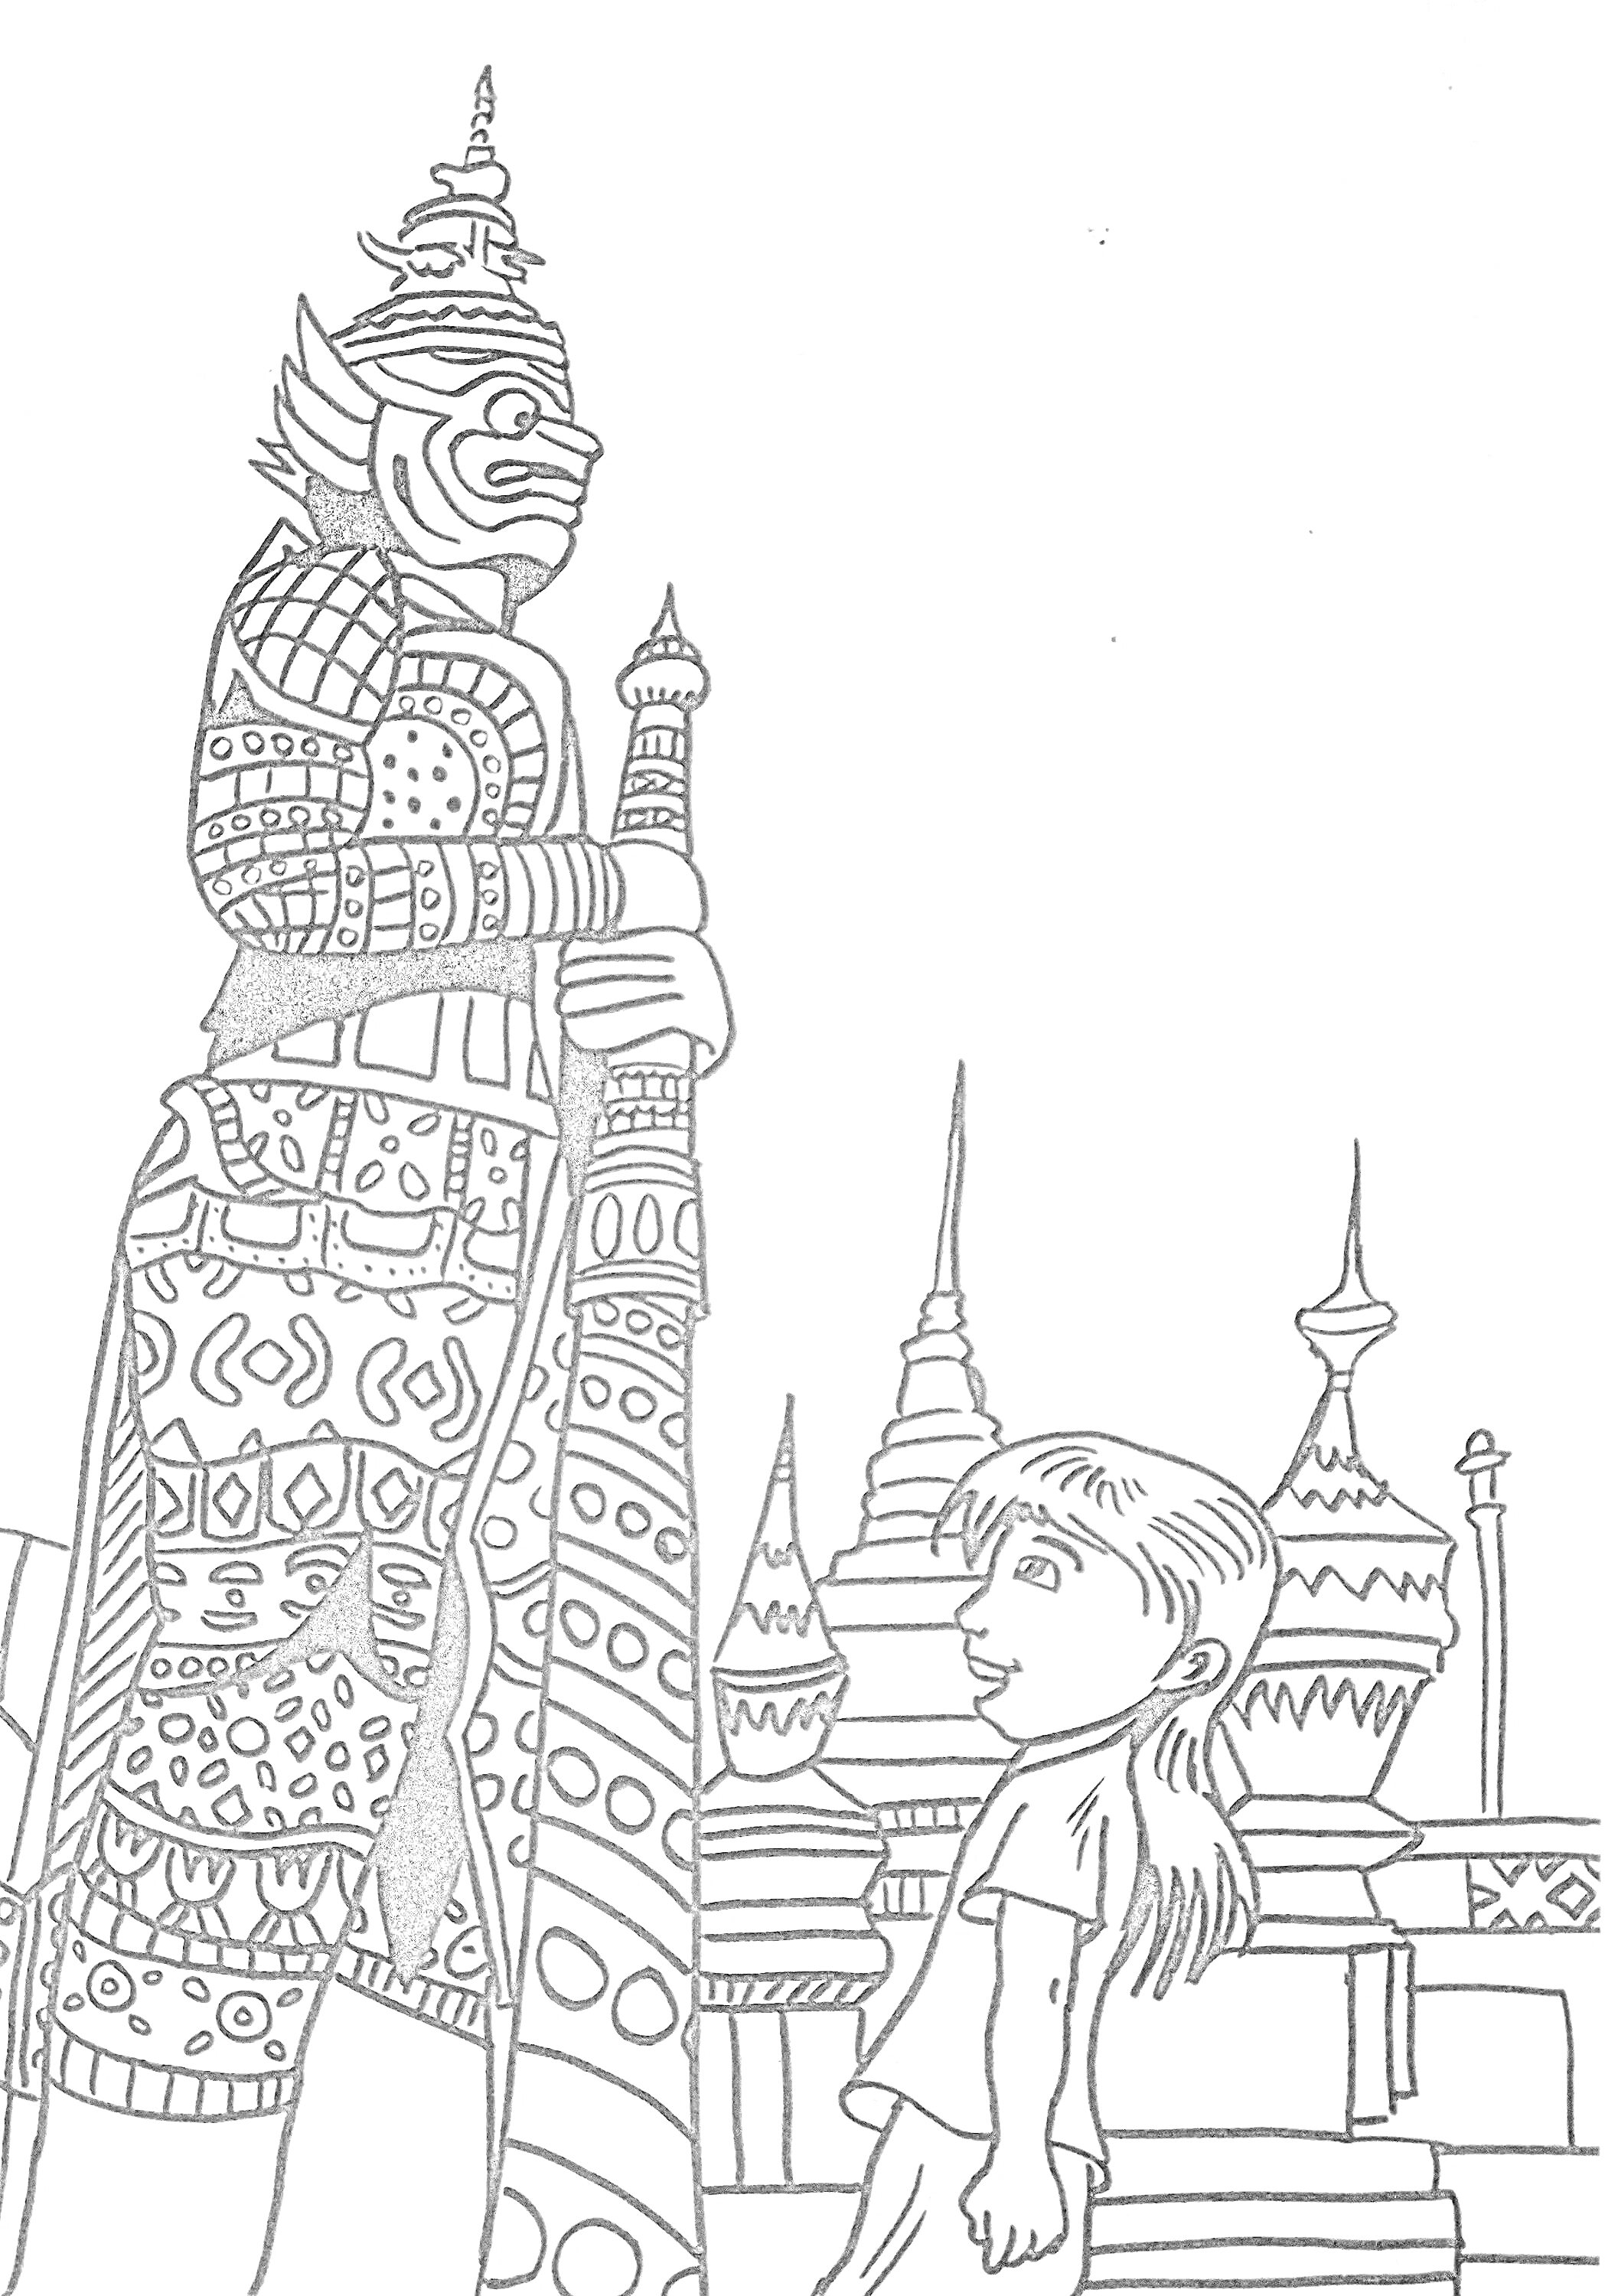 На раскраске изображено: Тайланд, Страж, Храм, Ребенок, Культура, Архитектура, Статуя, Буддизм